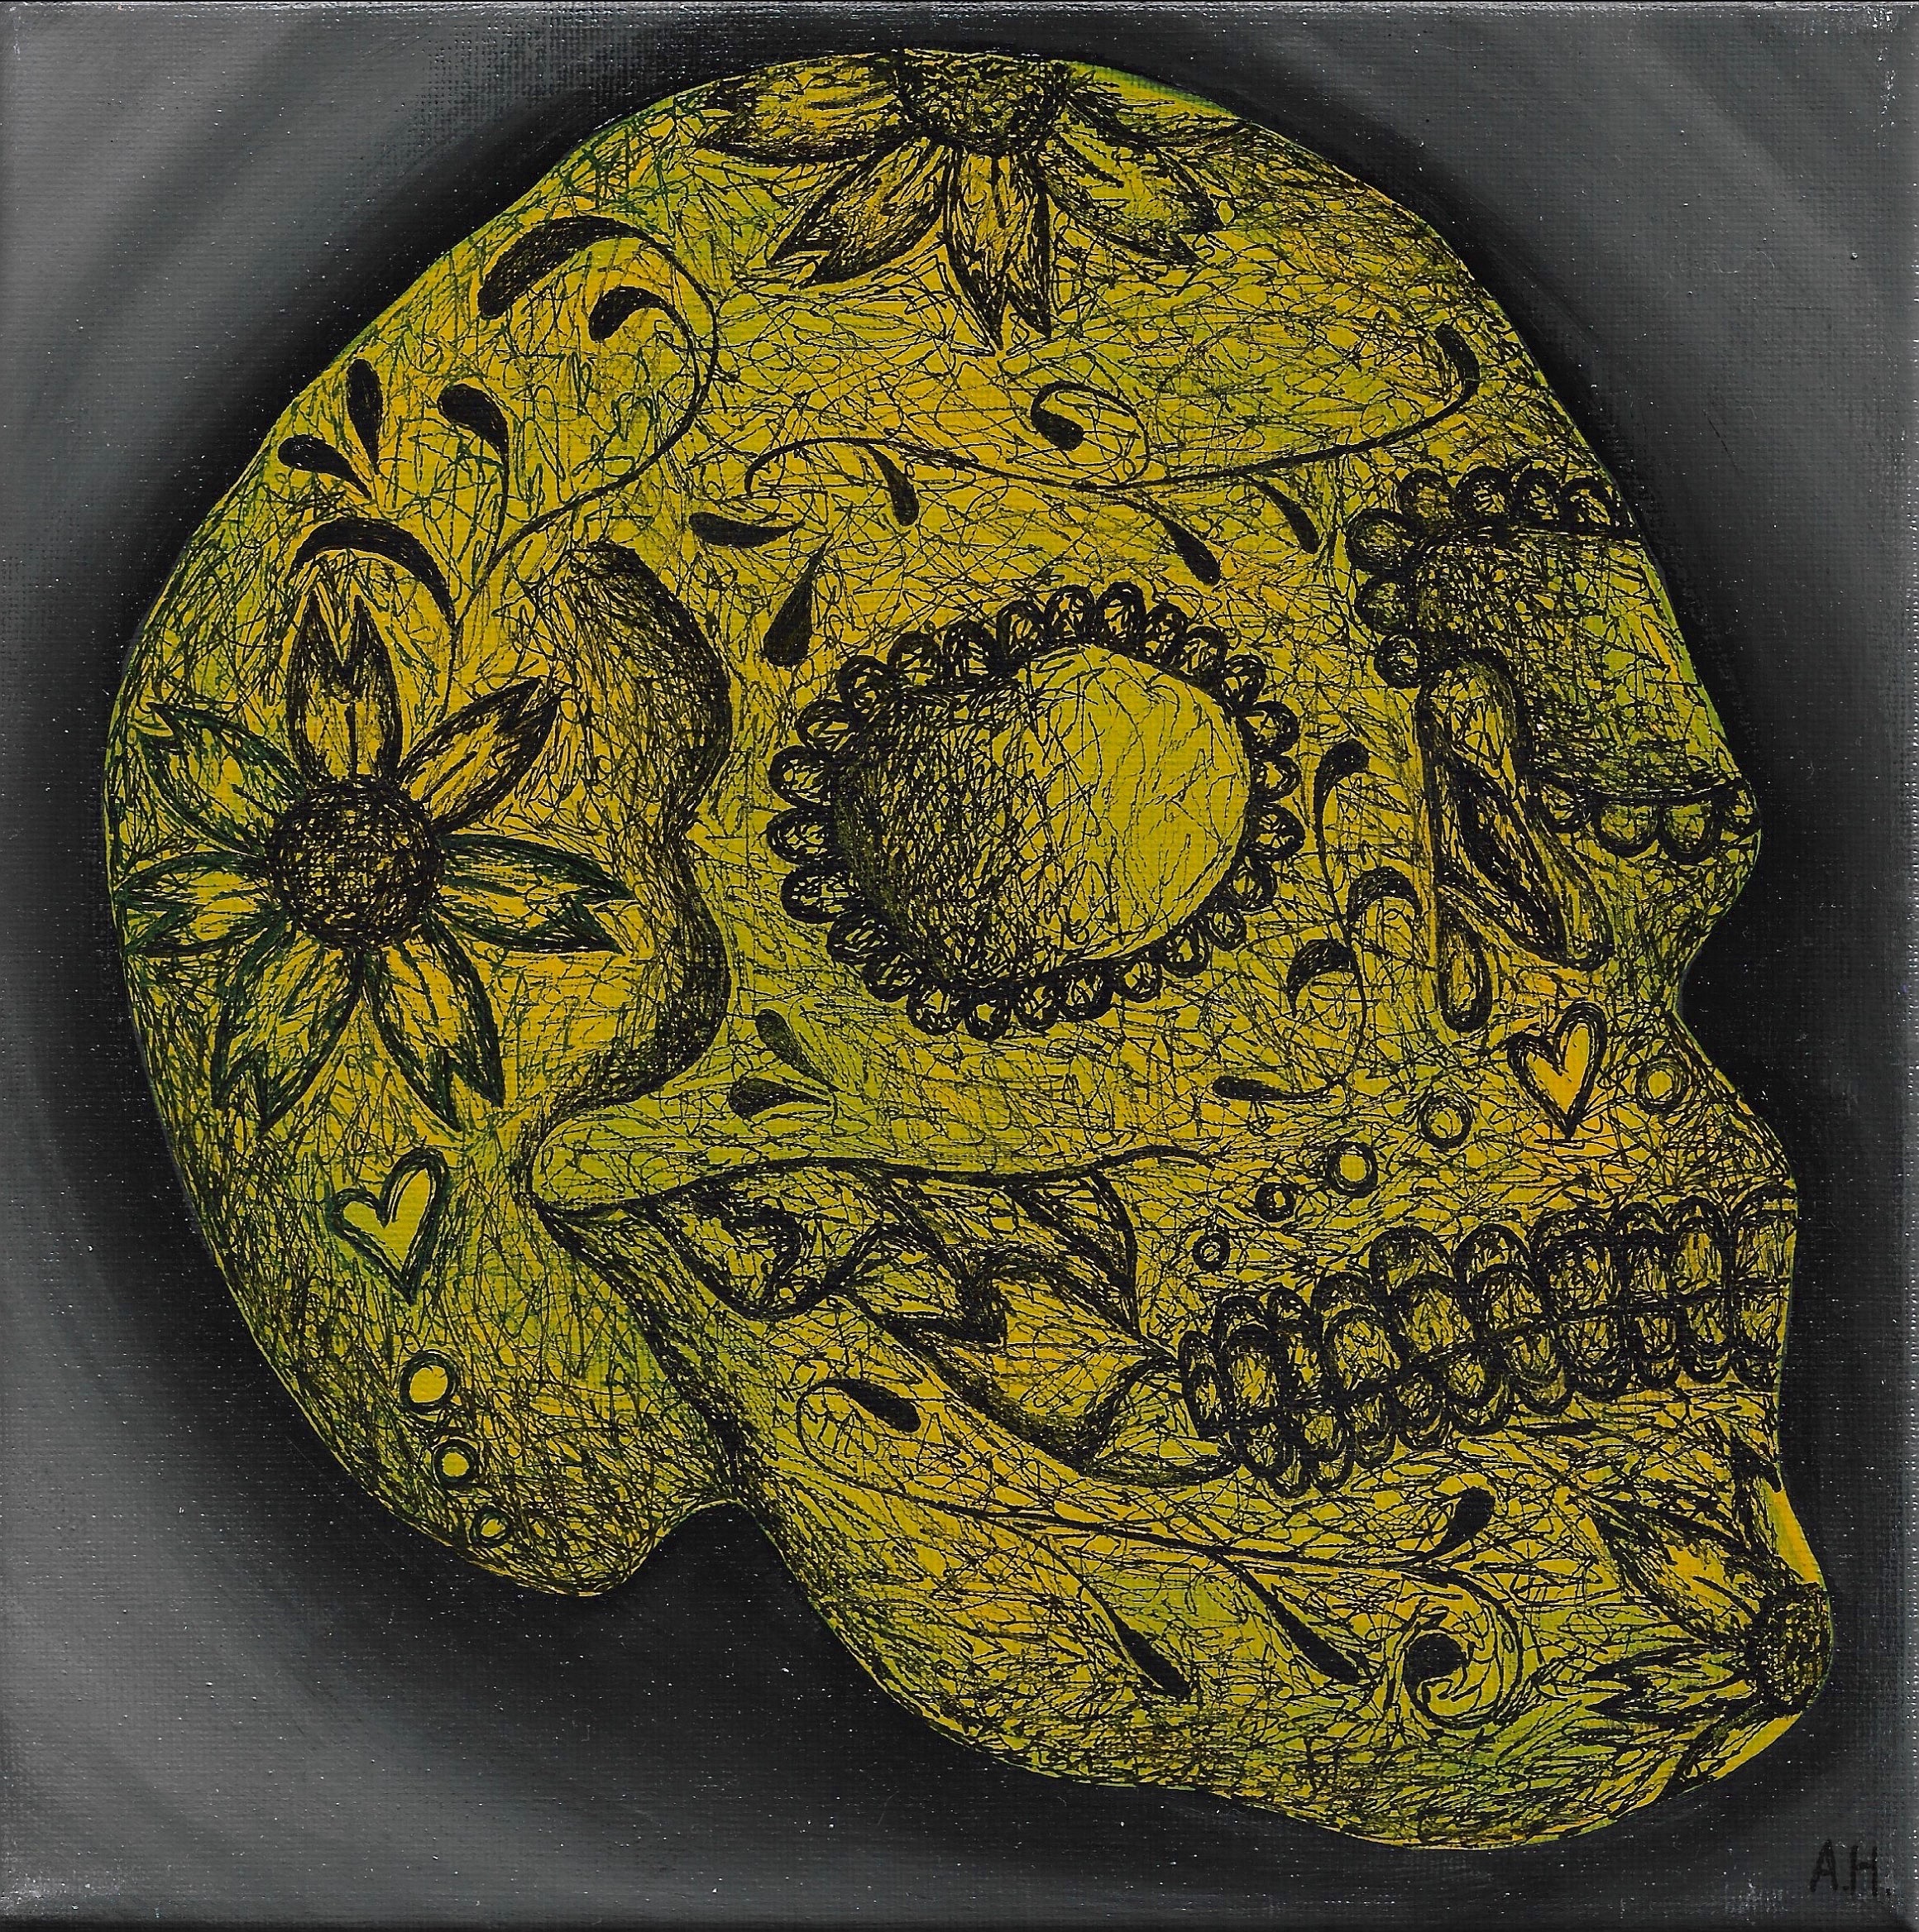 painting of a sugar skull